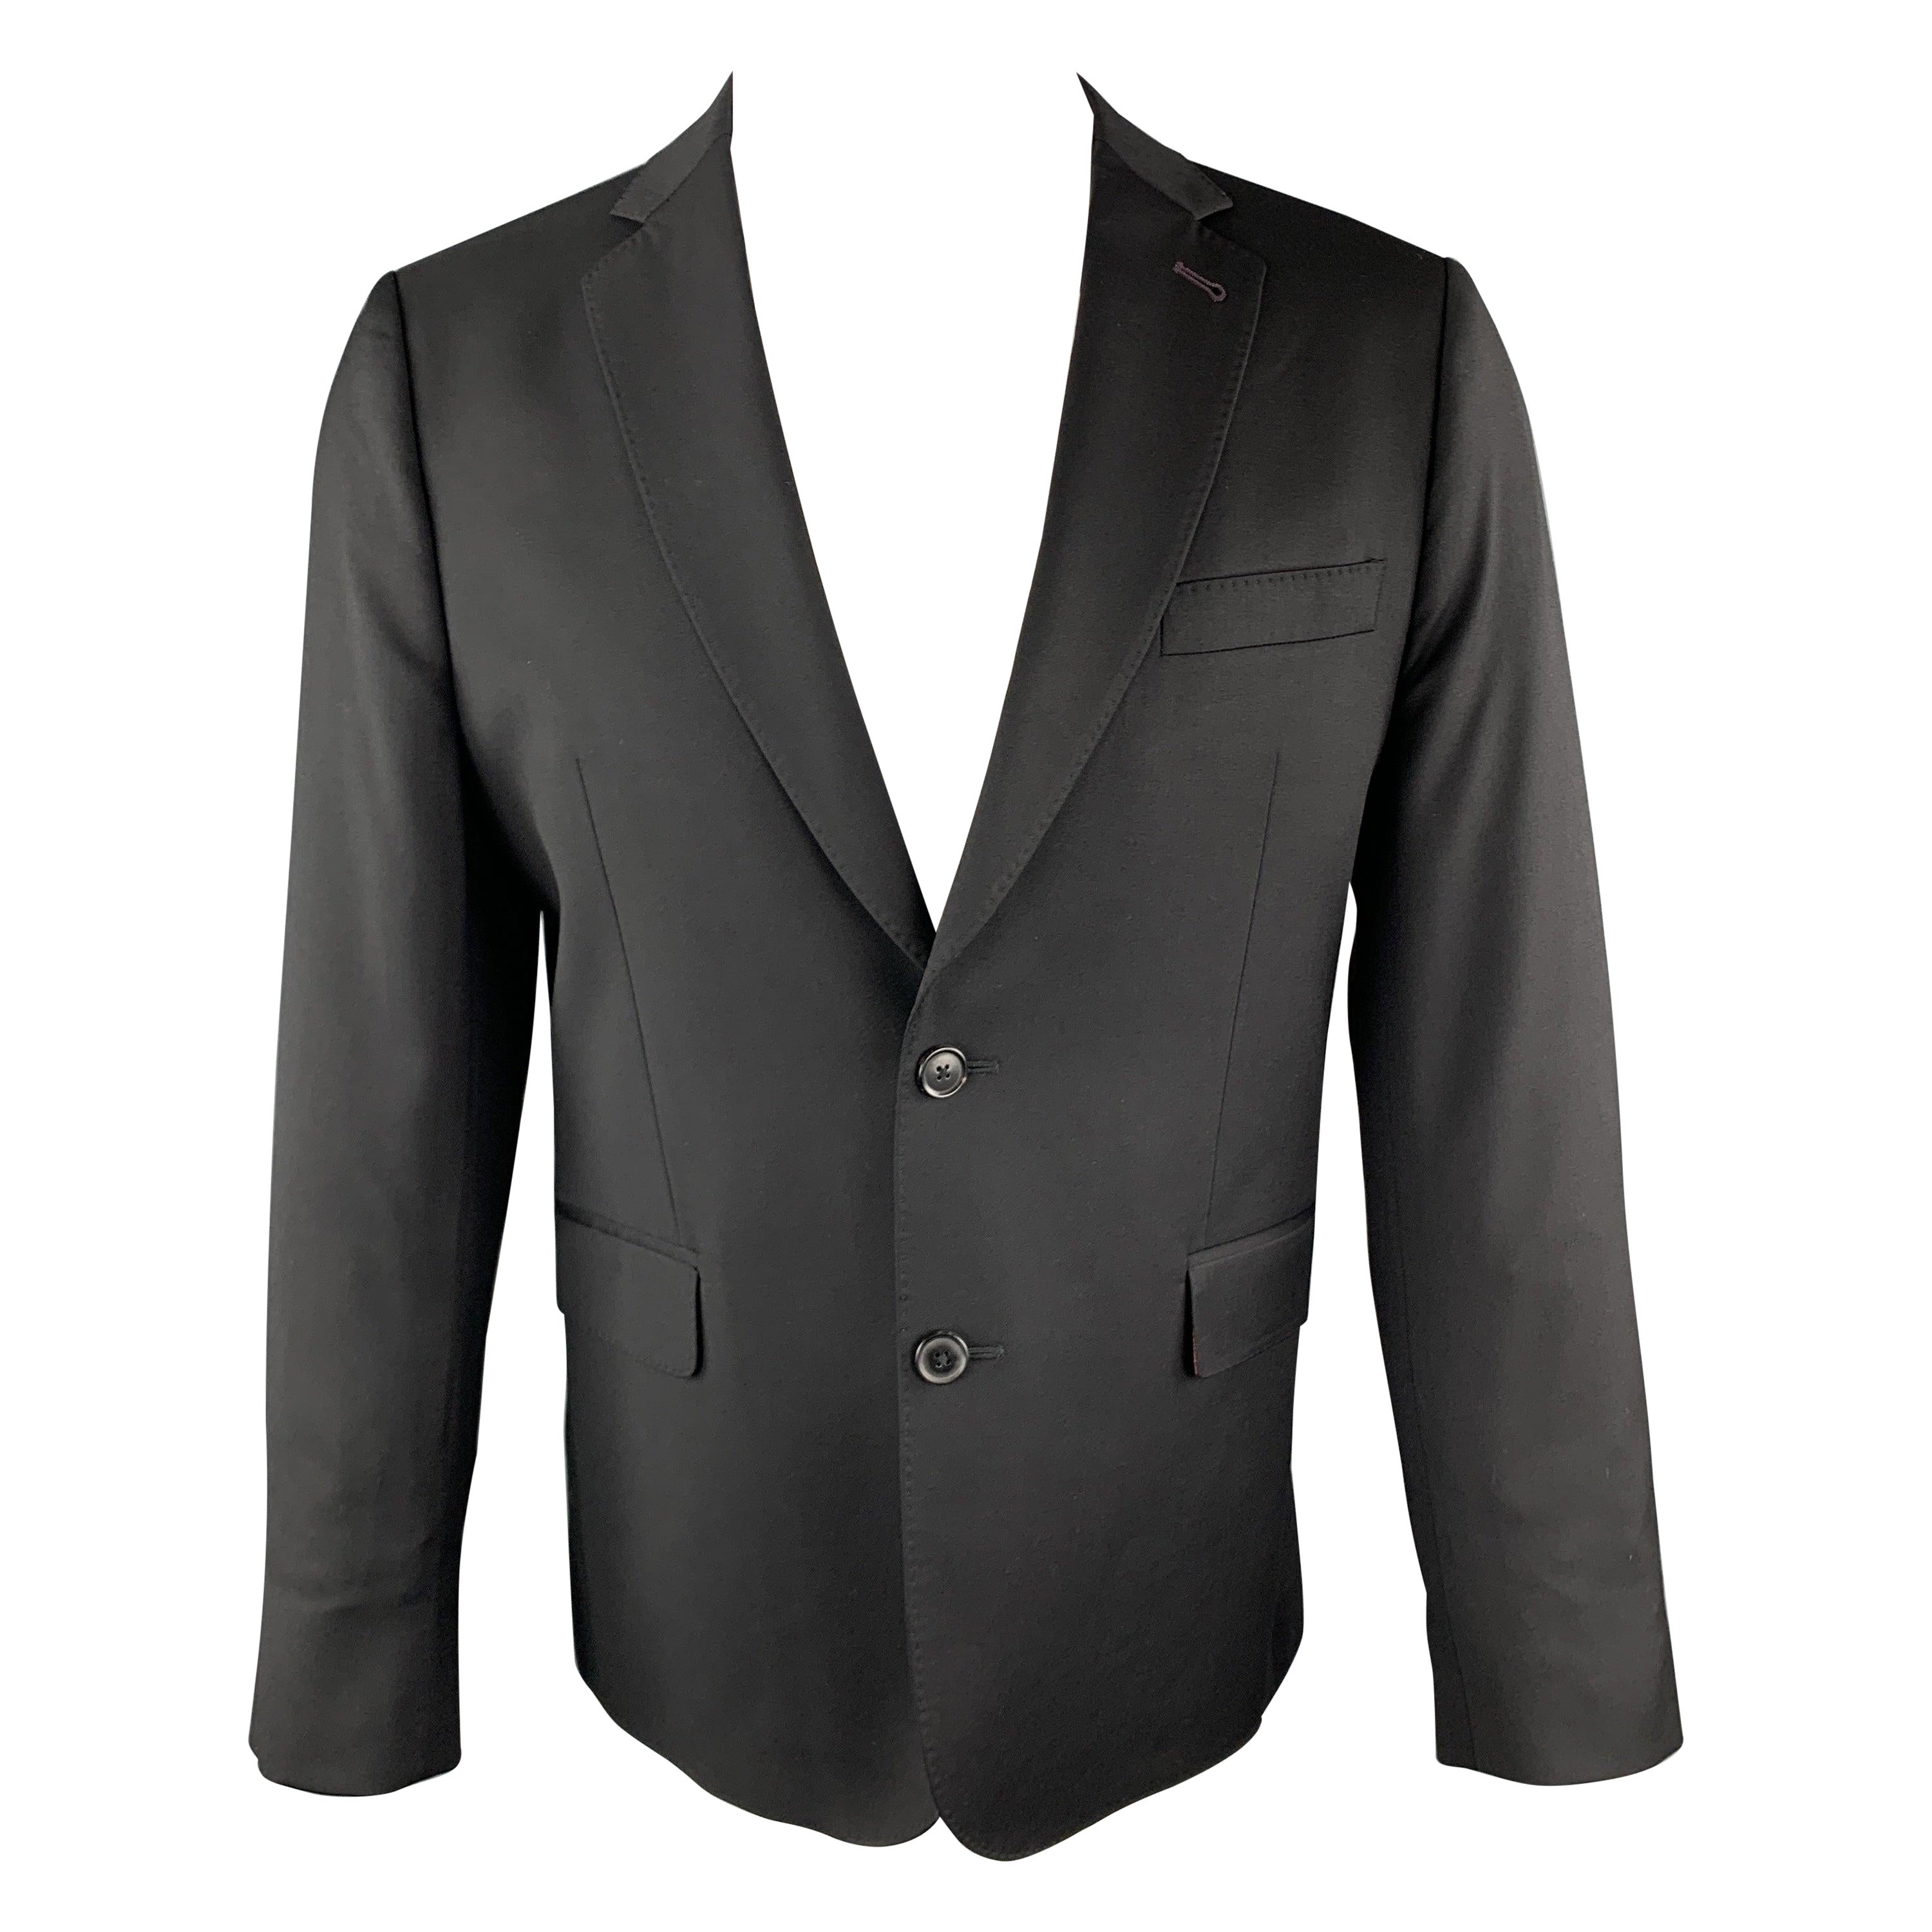 PAUL SMITH Size 42 Short Solid Black Wool Notch Lapel Sport Coat For Sale